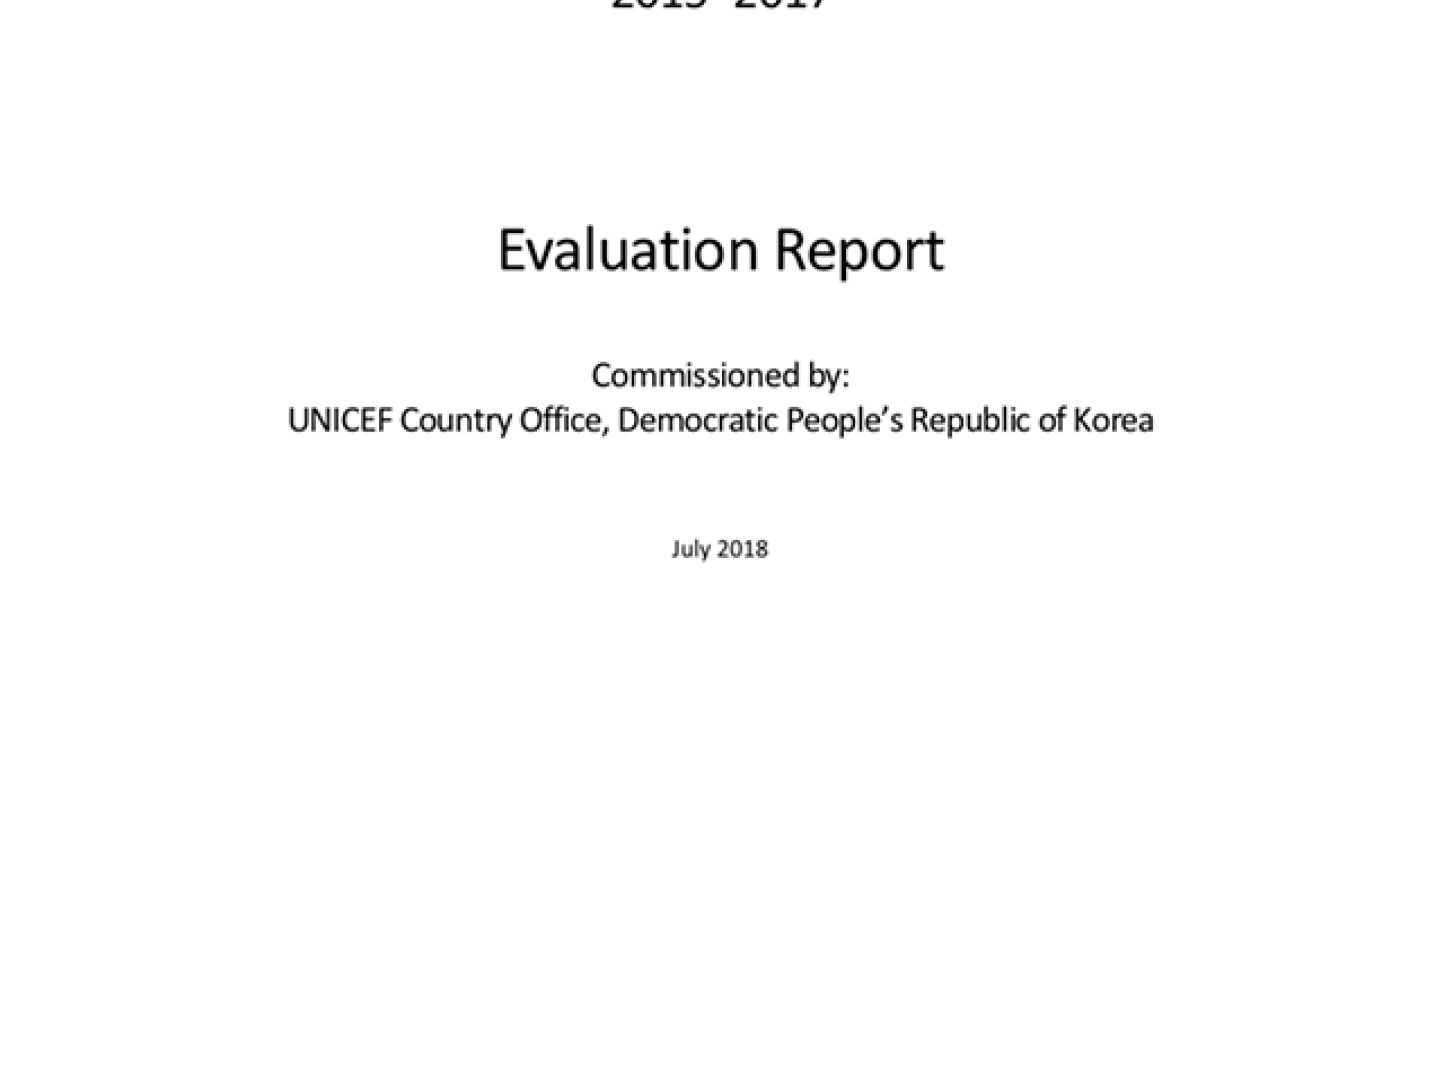 unicef-dprk-evaluation-report